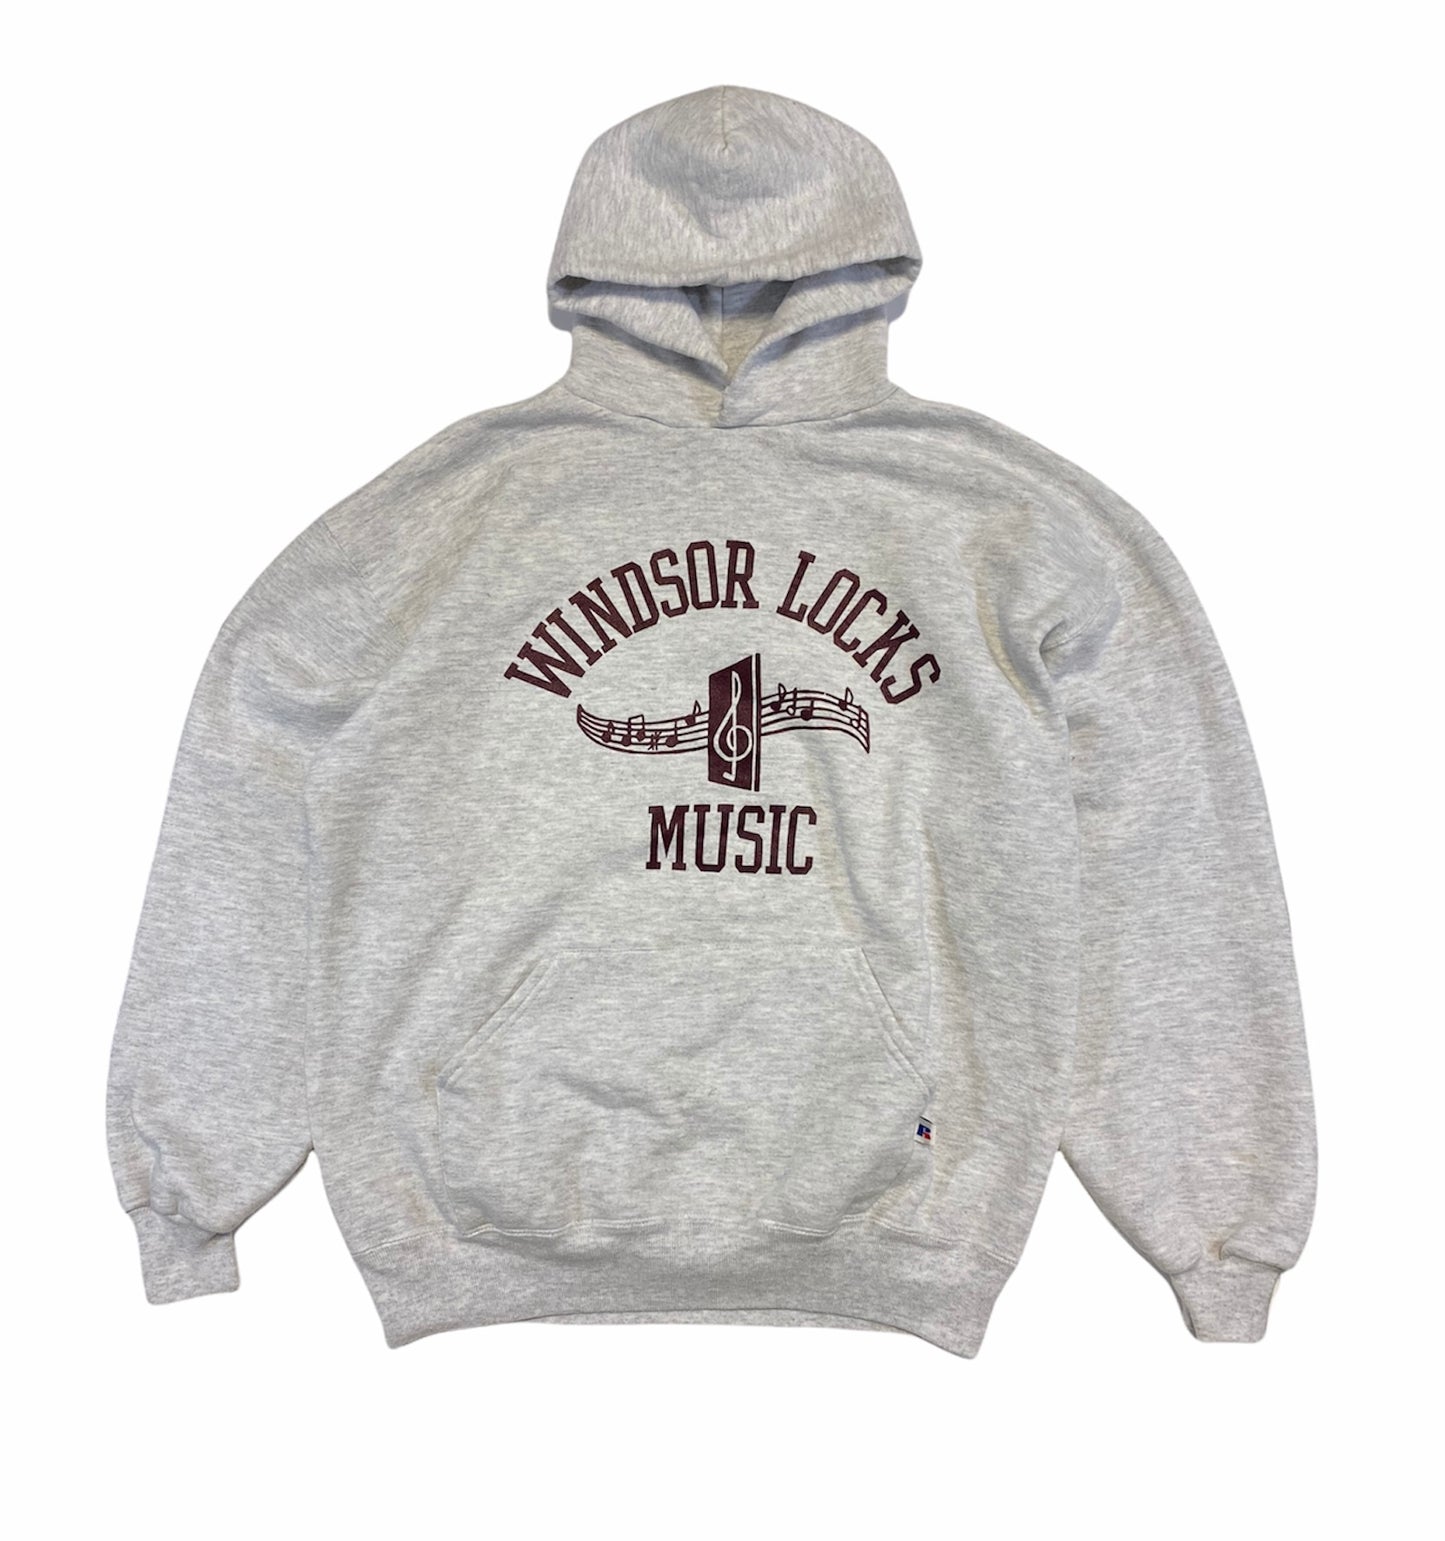 1990’s Russell Made in USA Windsor Locks Music Sweatshirt